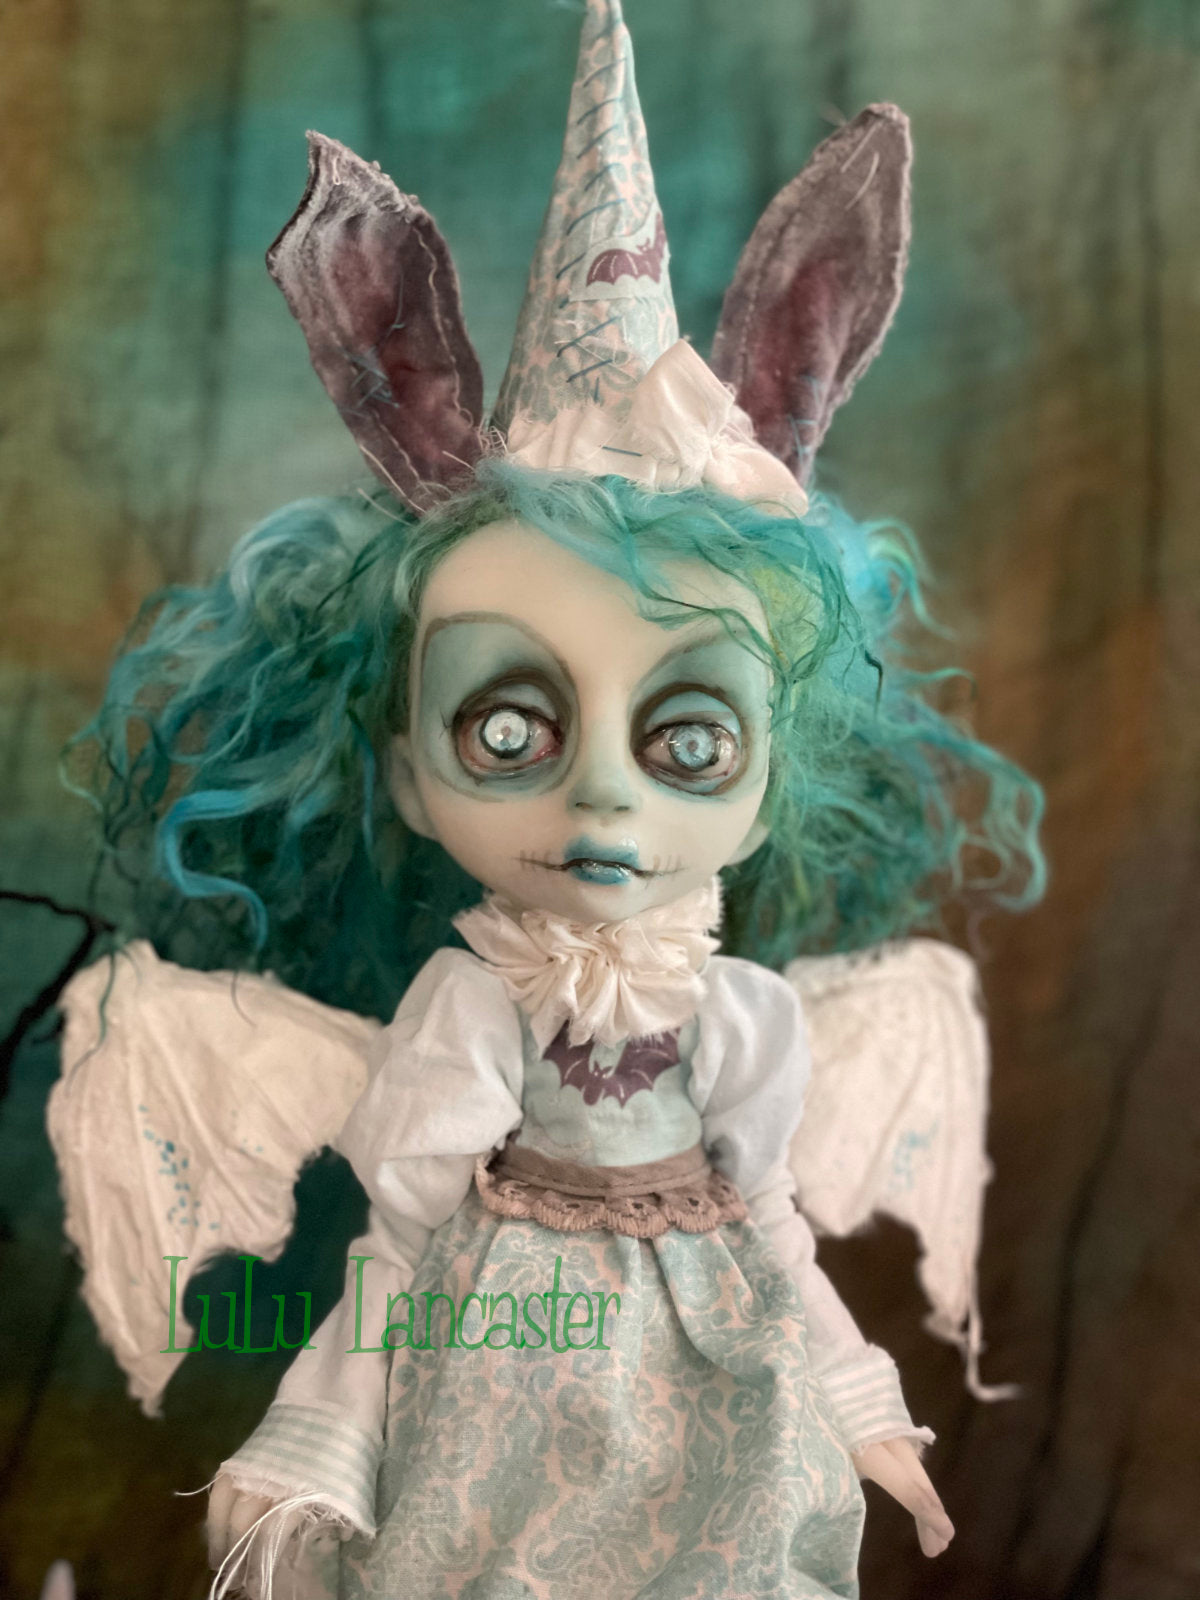 Lorcan the Bunny Bat Goth Halloween Original LuLu Lancaster Art Doll